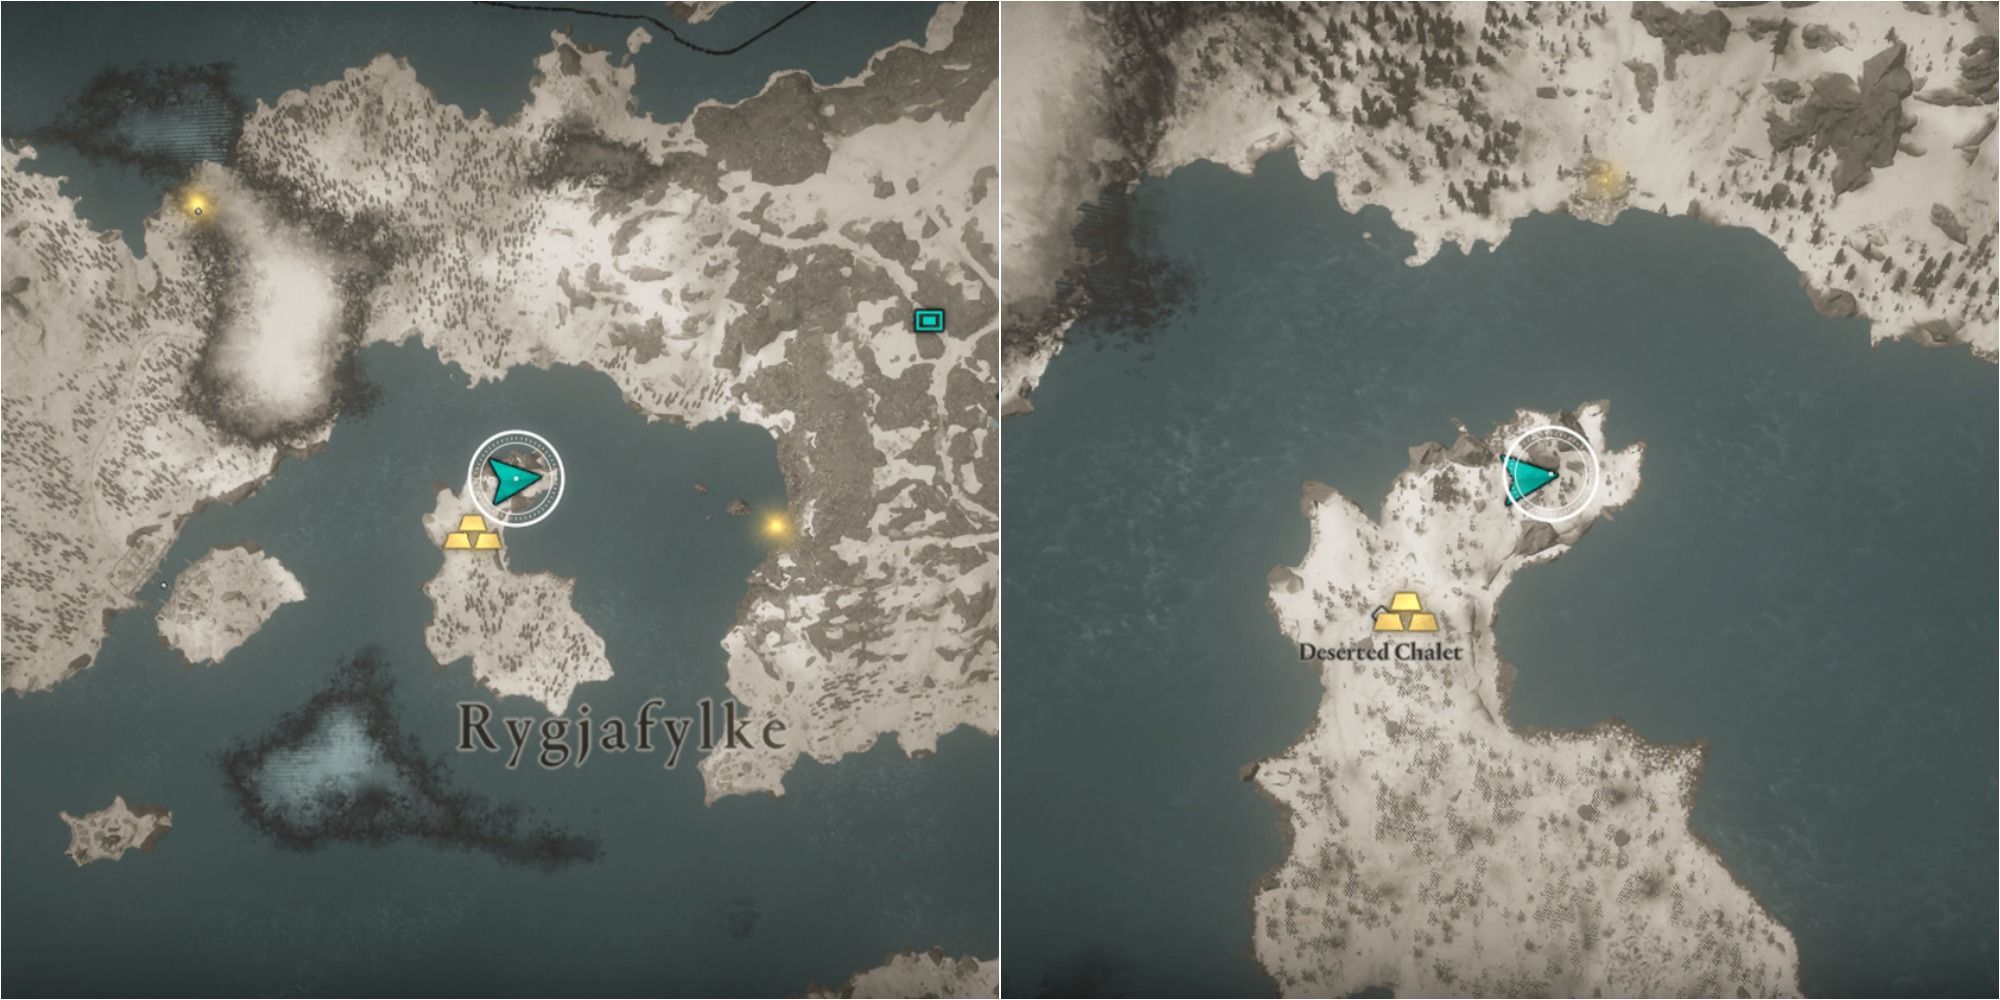 Assassin's Creed Valhalla Split Image Showing Deserted Chalet Key Map Location